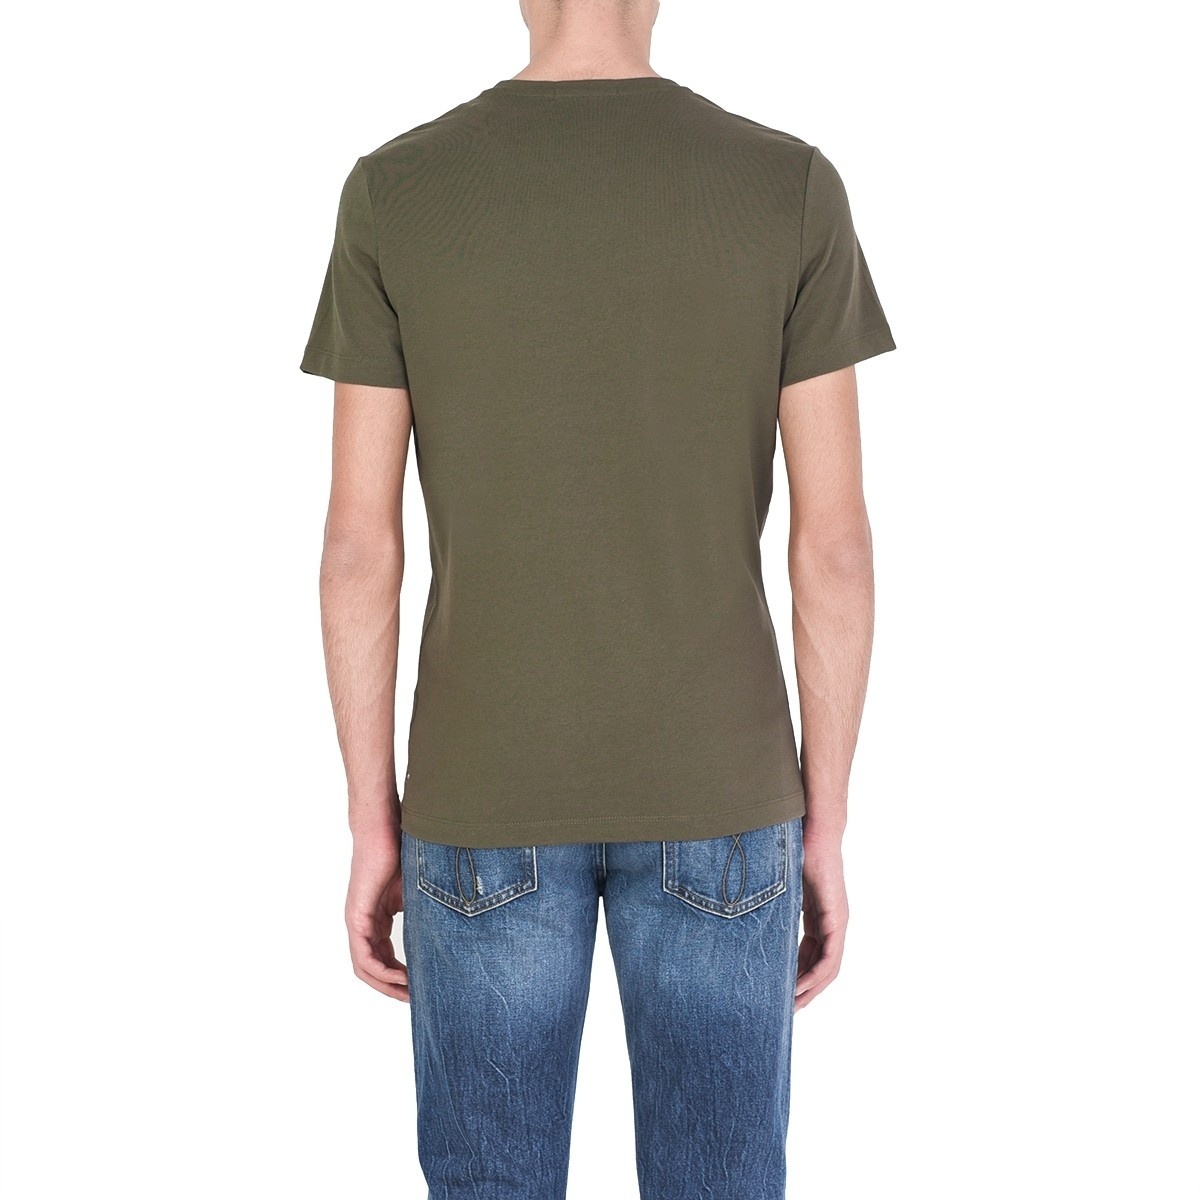 Calvin Klein pánske zelené tričko - L (371)